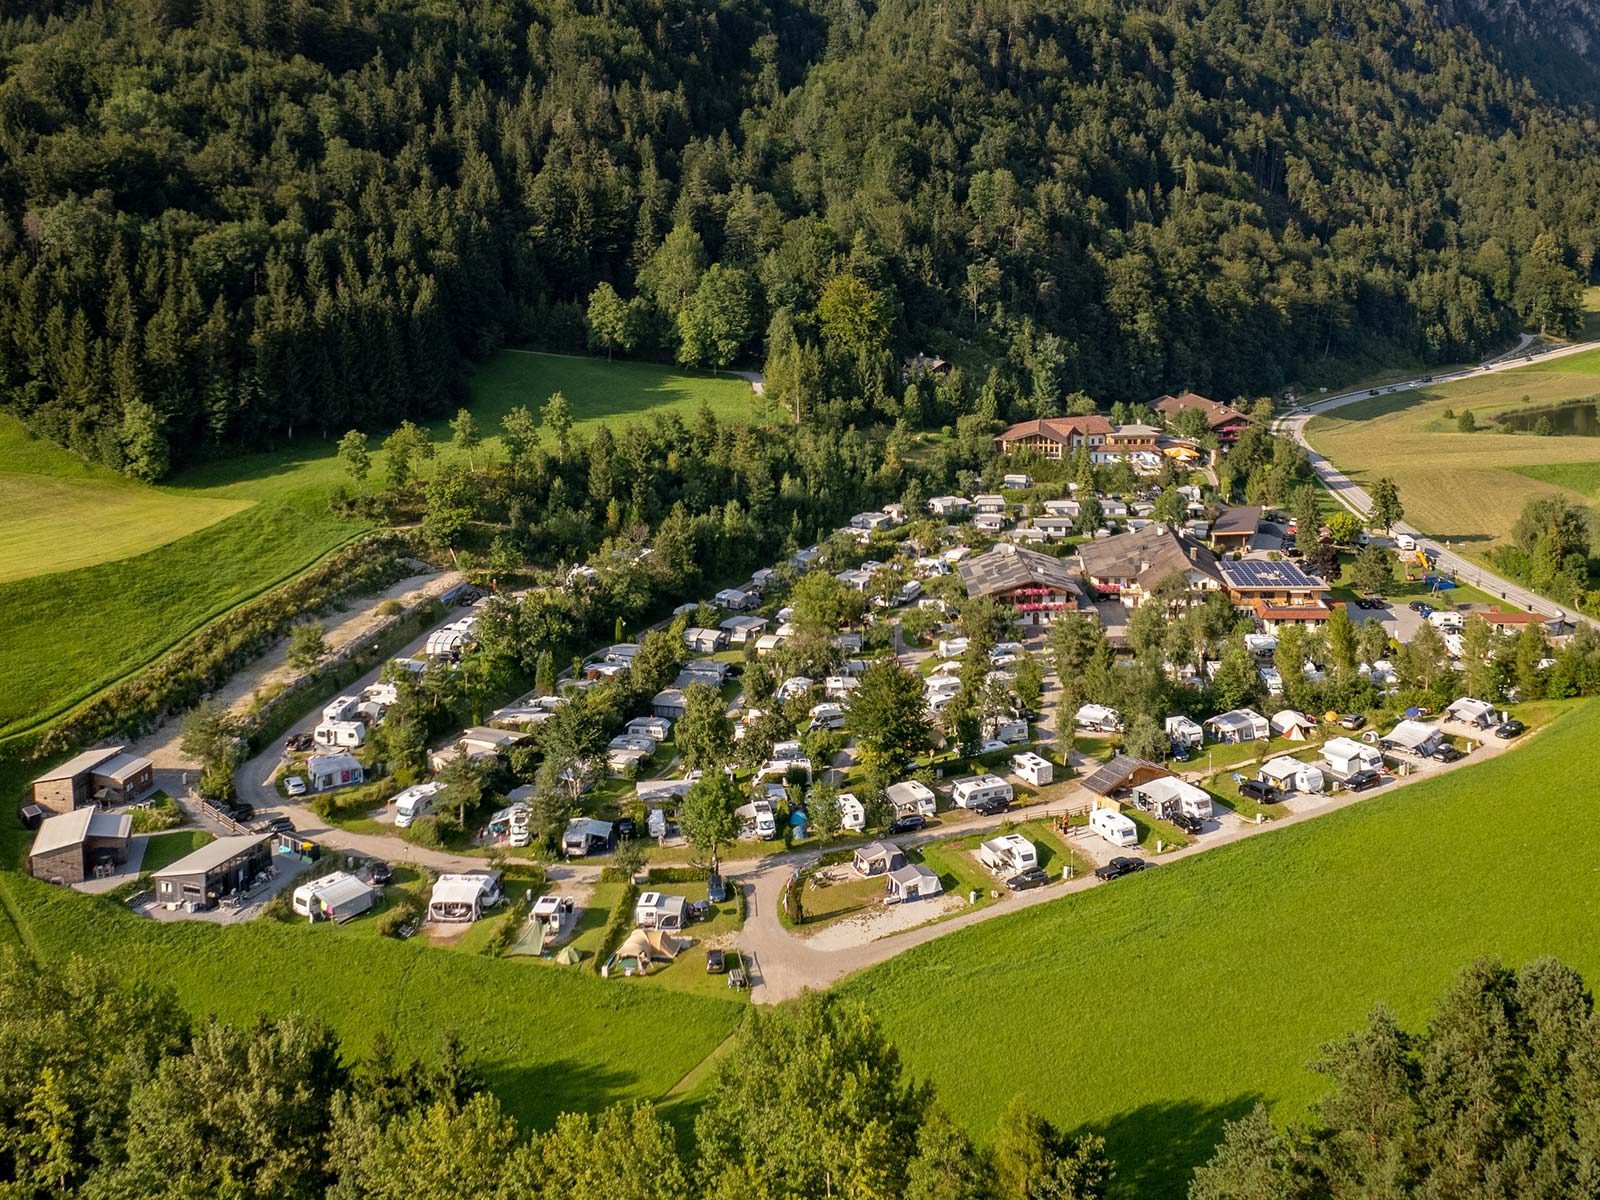 Panoramafoto vom Campingplatz Stadlerhof